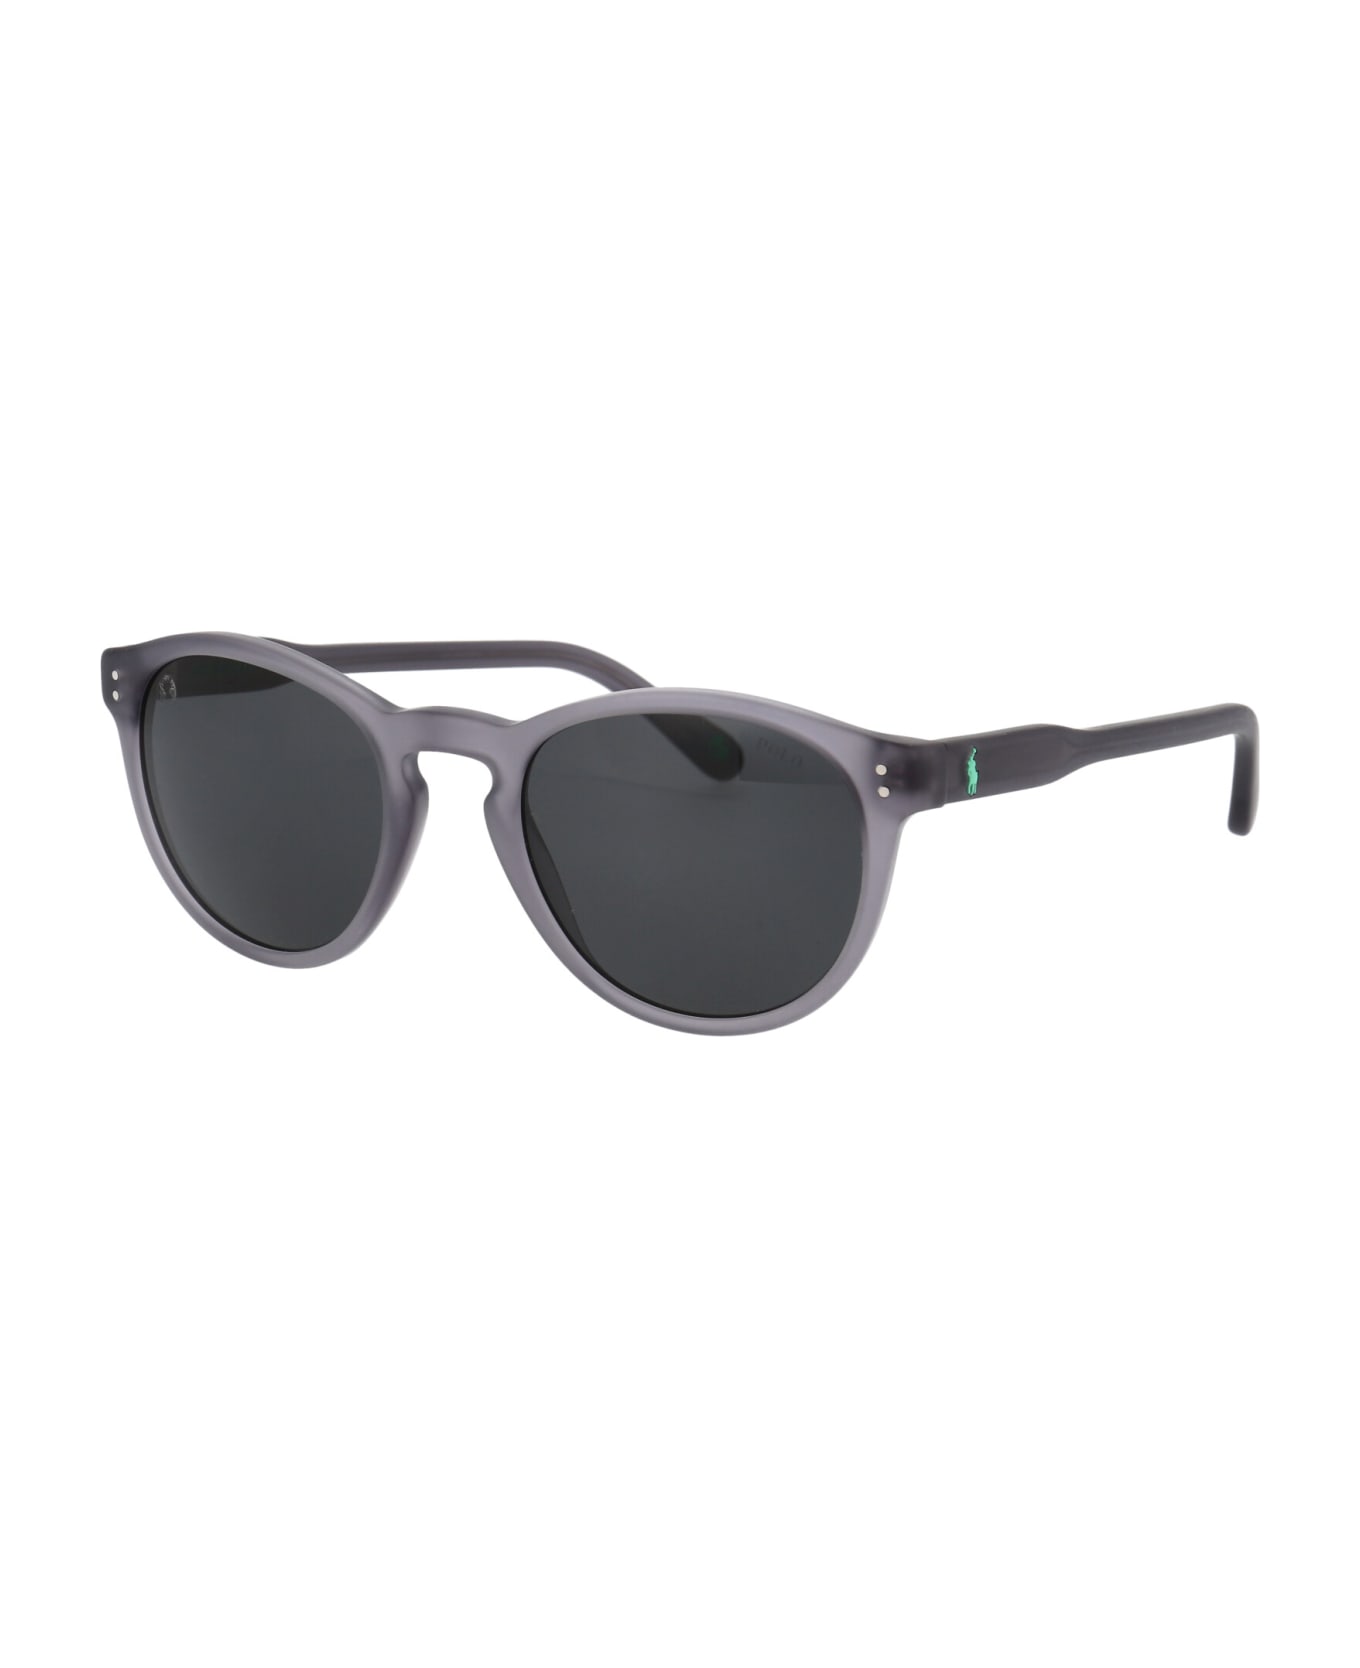 Polo Ralph Lauren 0ph4172 Sunglasses - 595387 MATTE TRANSPARENT DARK GREY